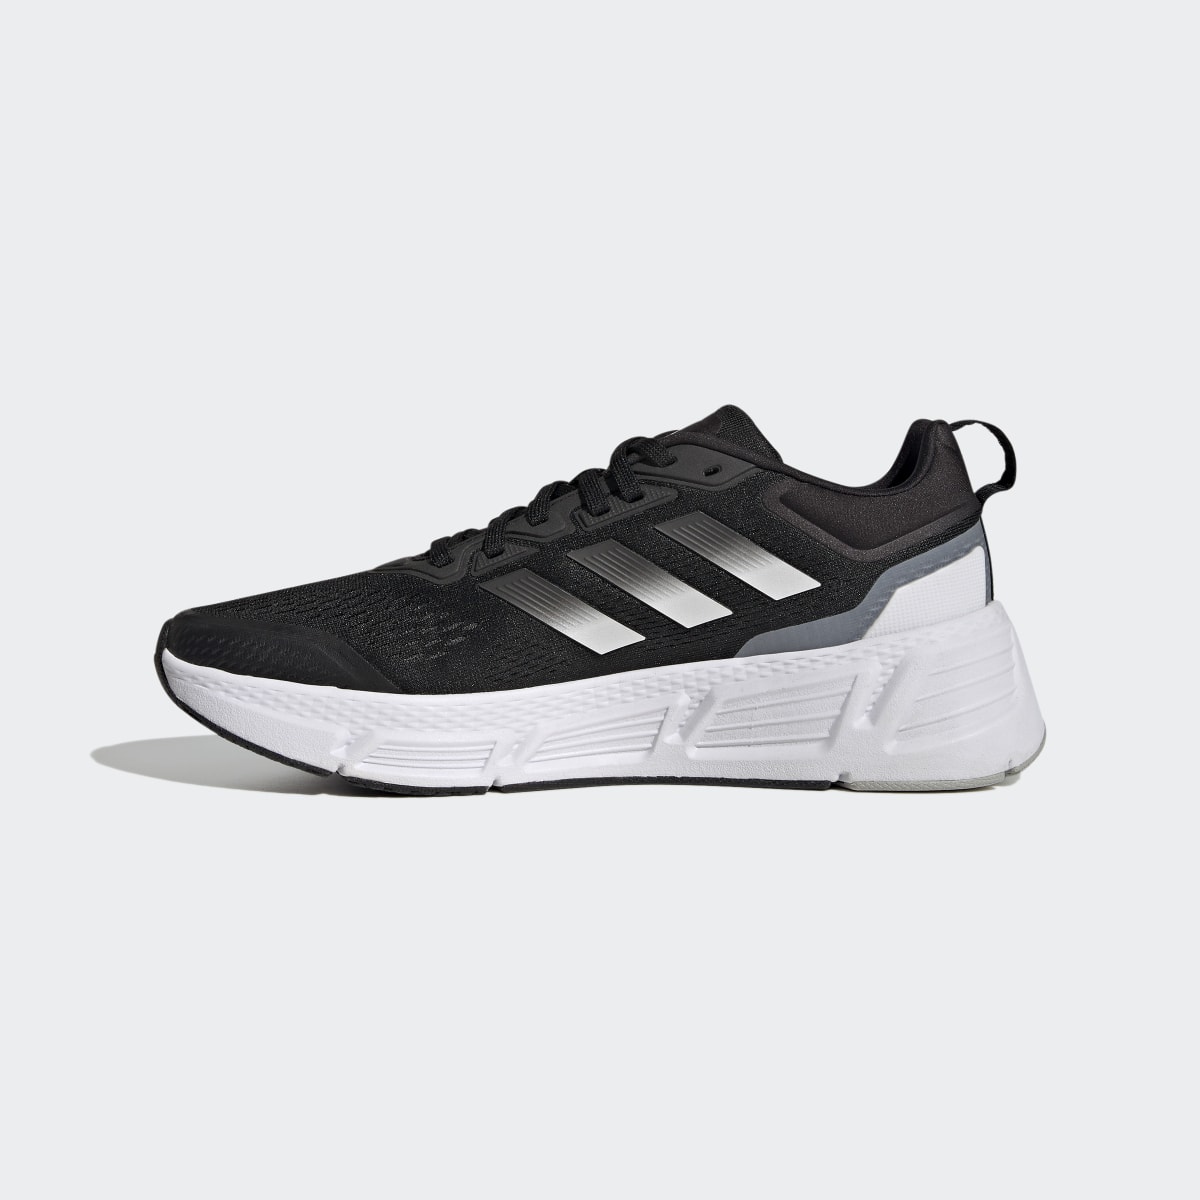 Adidas Questar Running Shoes. 7